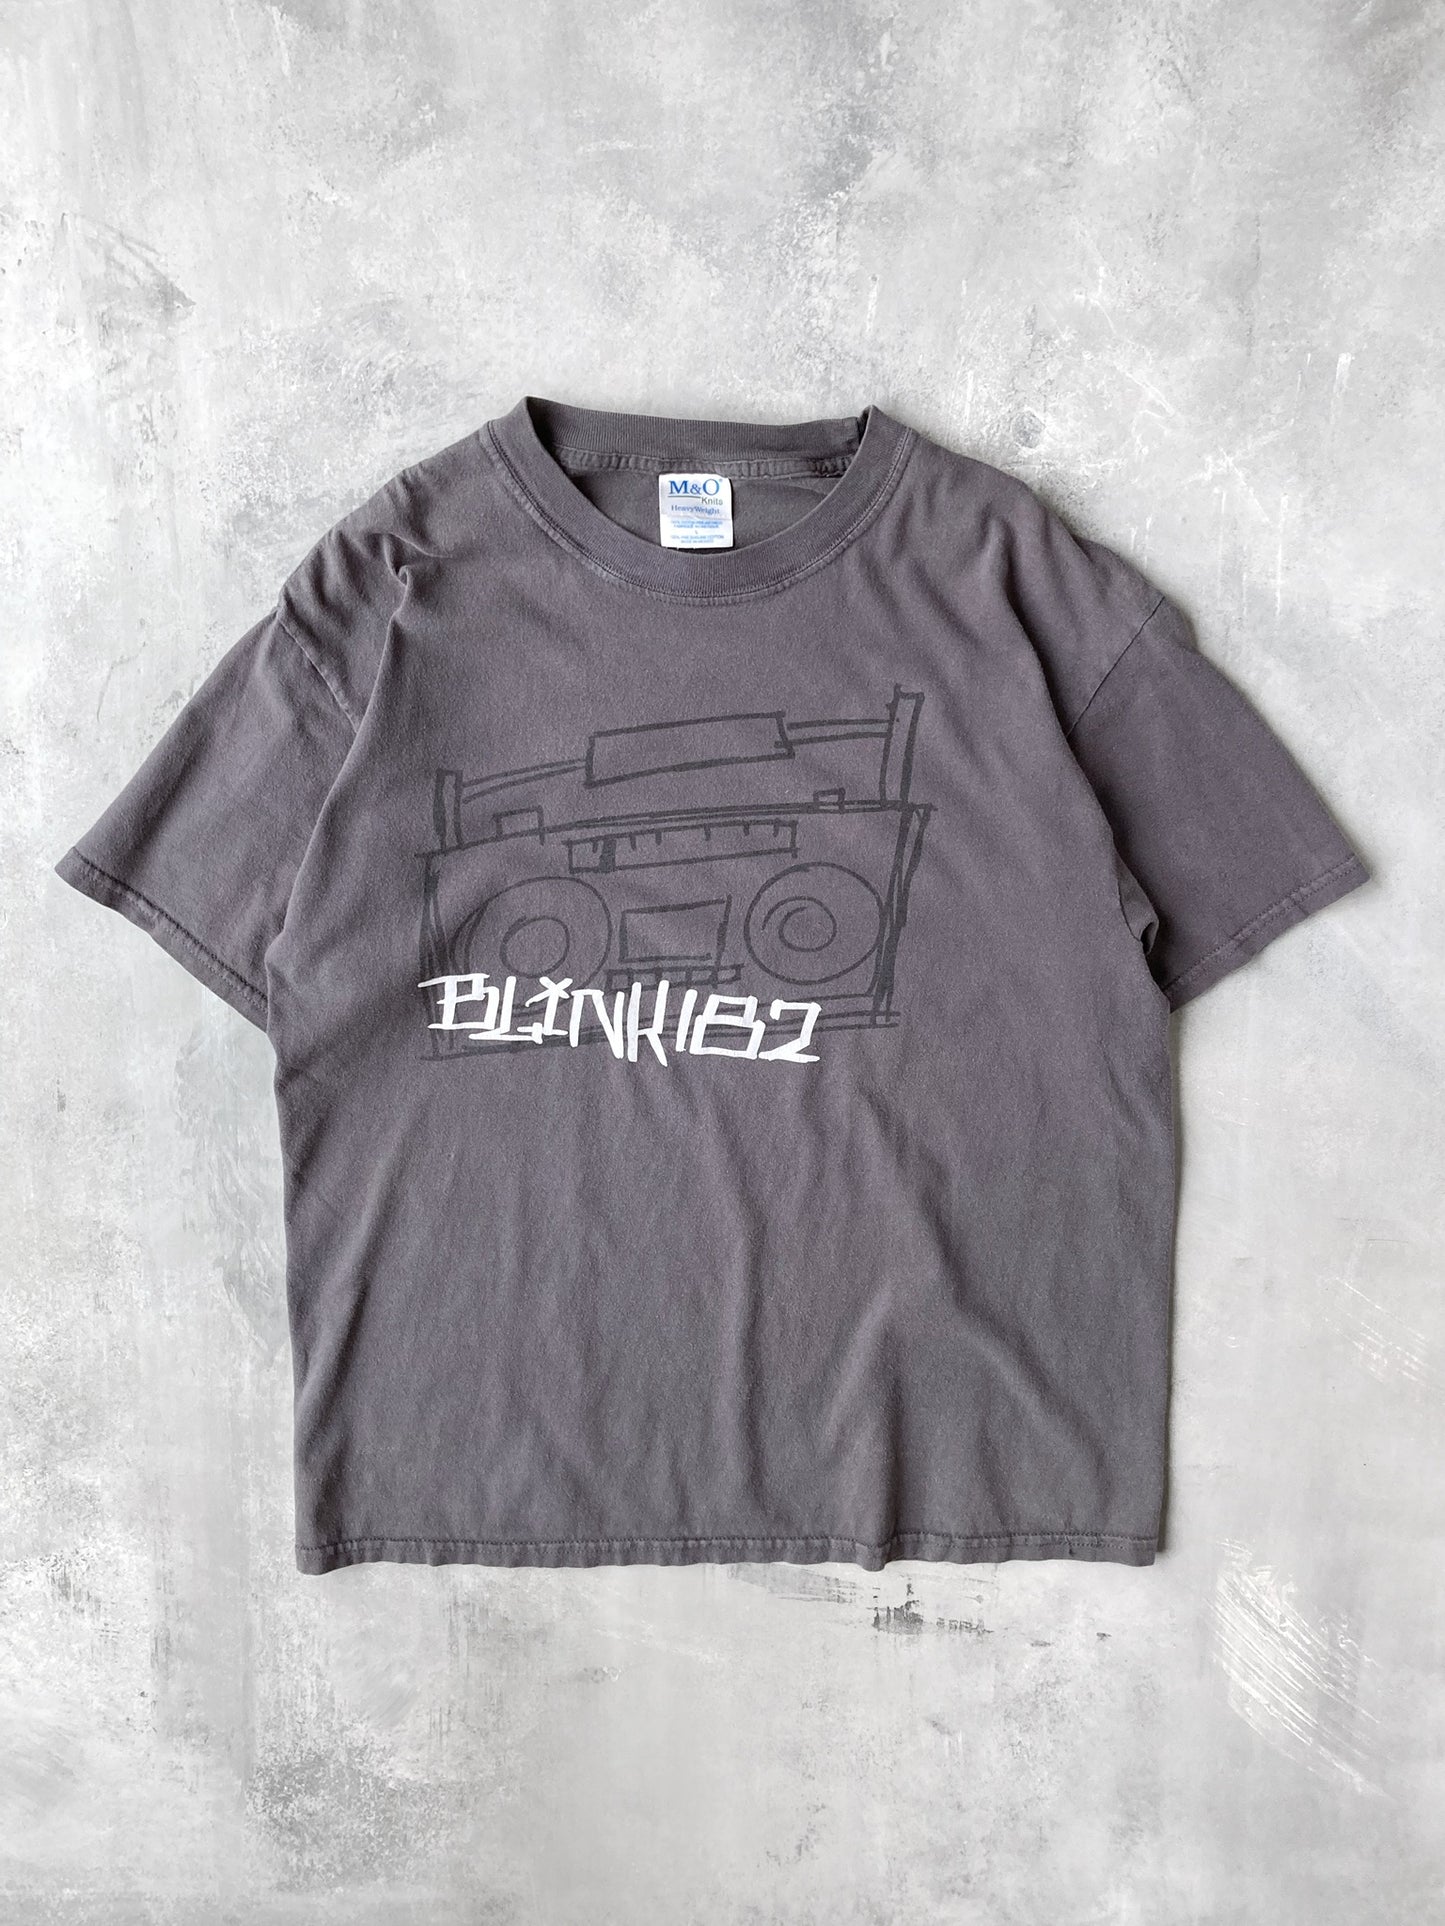 Blink 182 T-Shirt 00's - Large